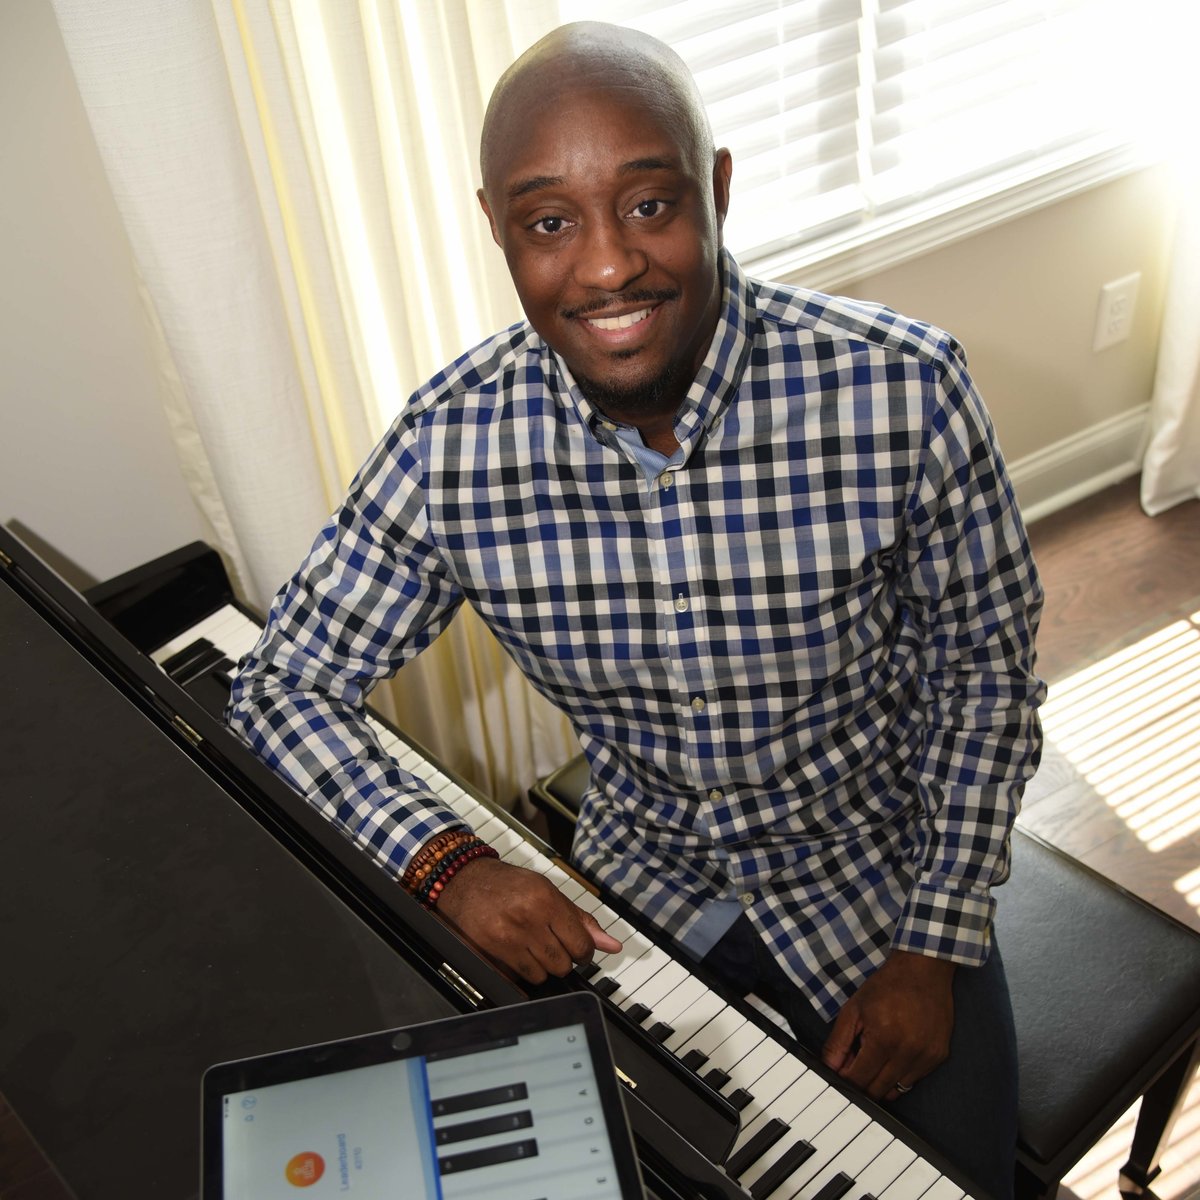 Professor de piano real – Apps no Google Play